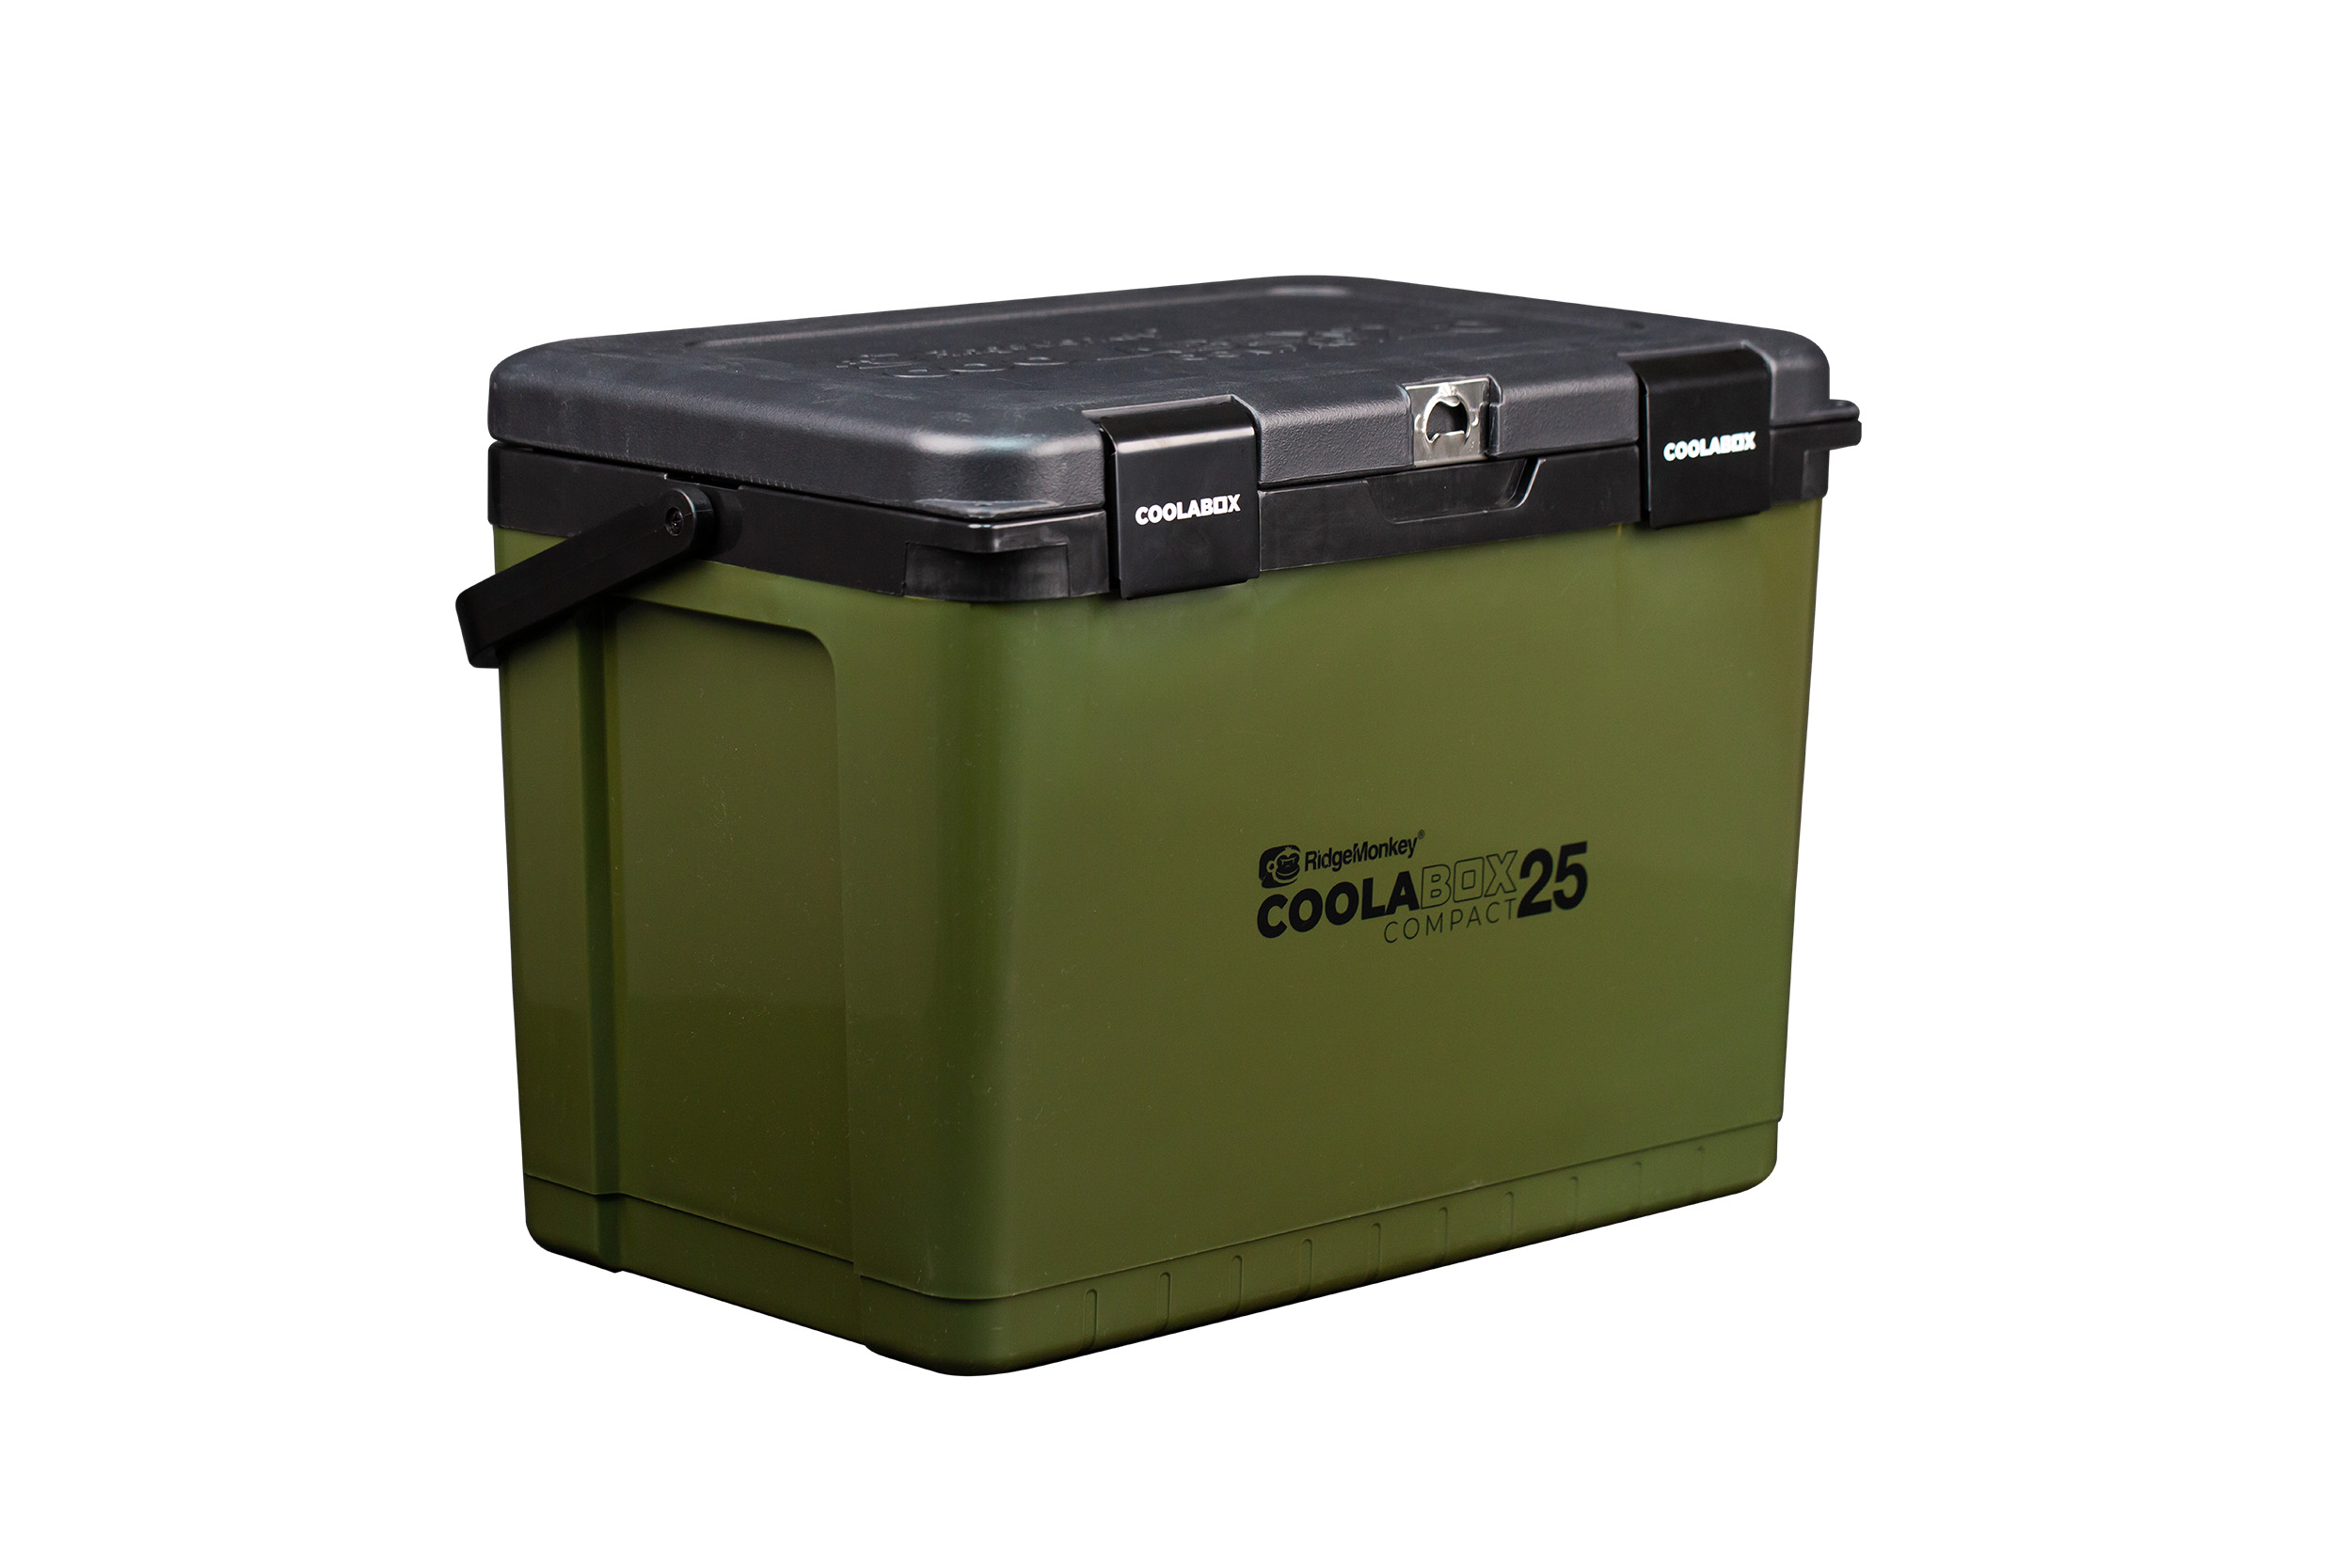 RidgeMonkey Chladící Box CoolaBox Compact 25L